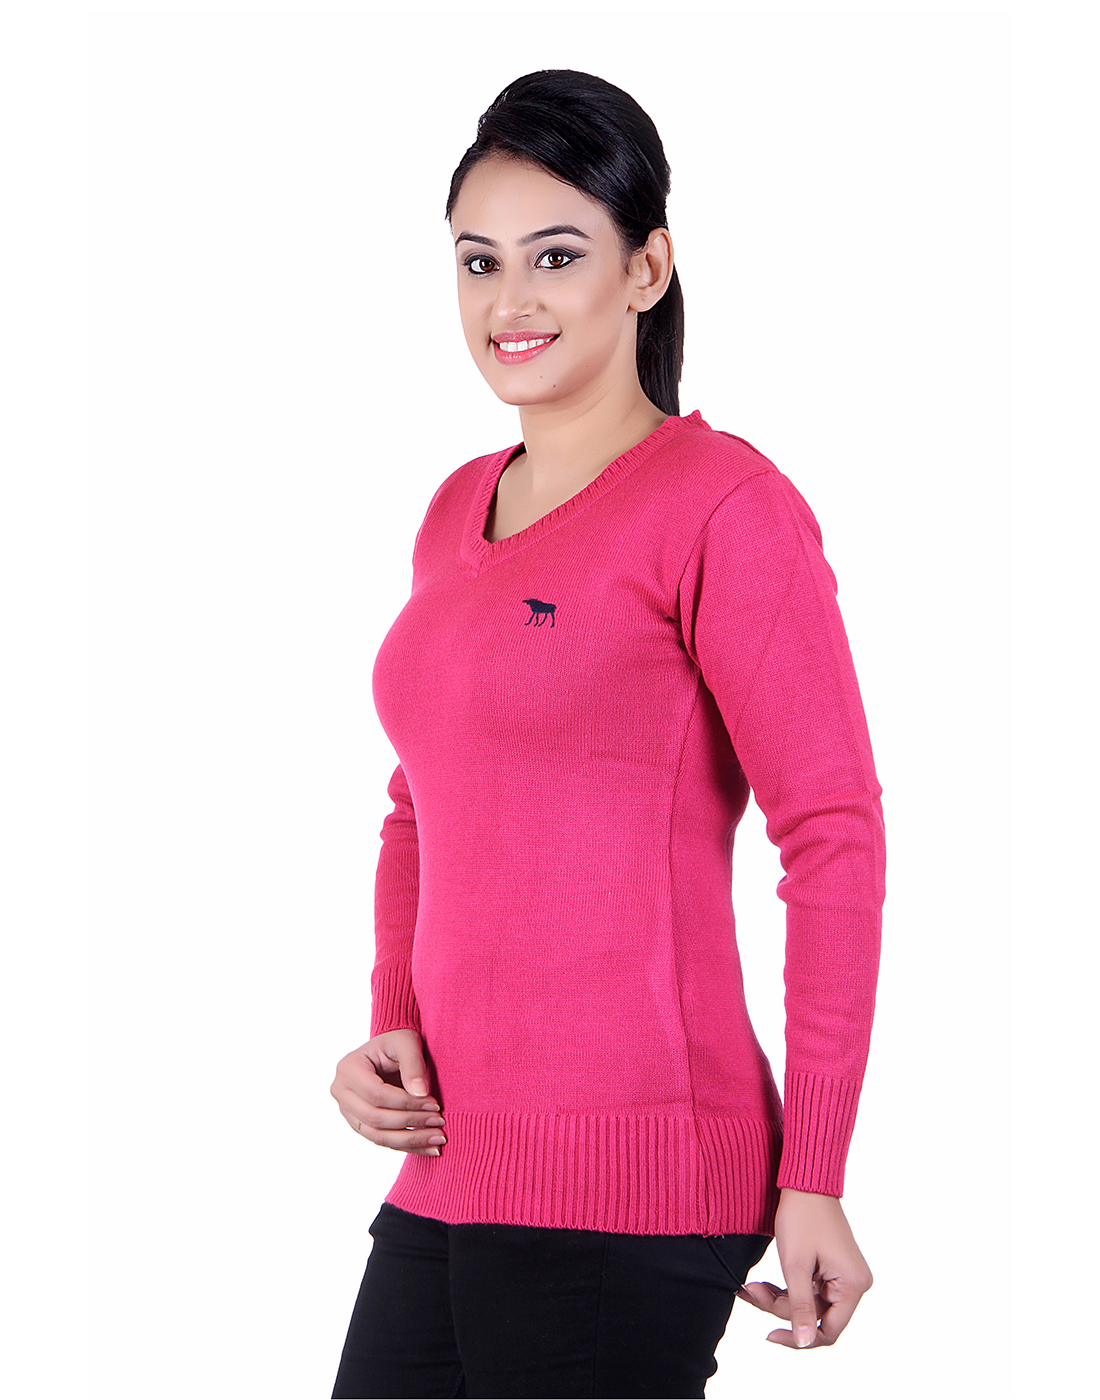 Buy Women's Woolen Top For Girls / Woman Online @ ₹755 from ShopClues